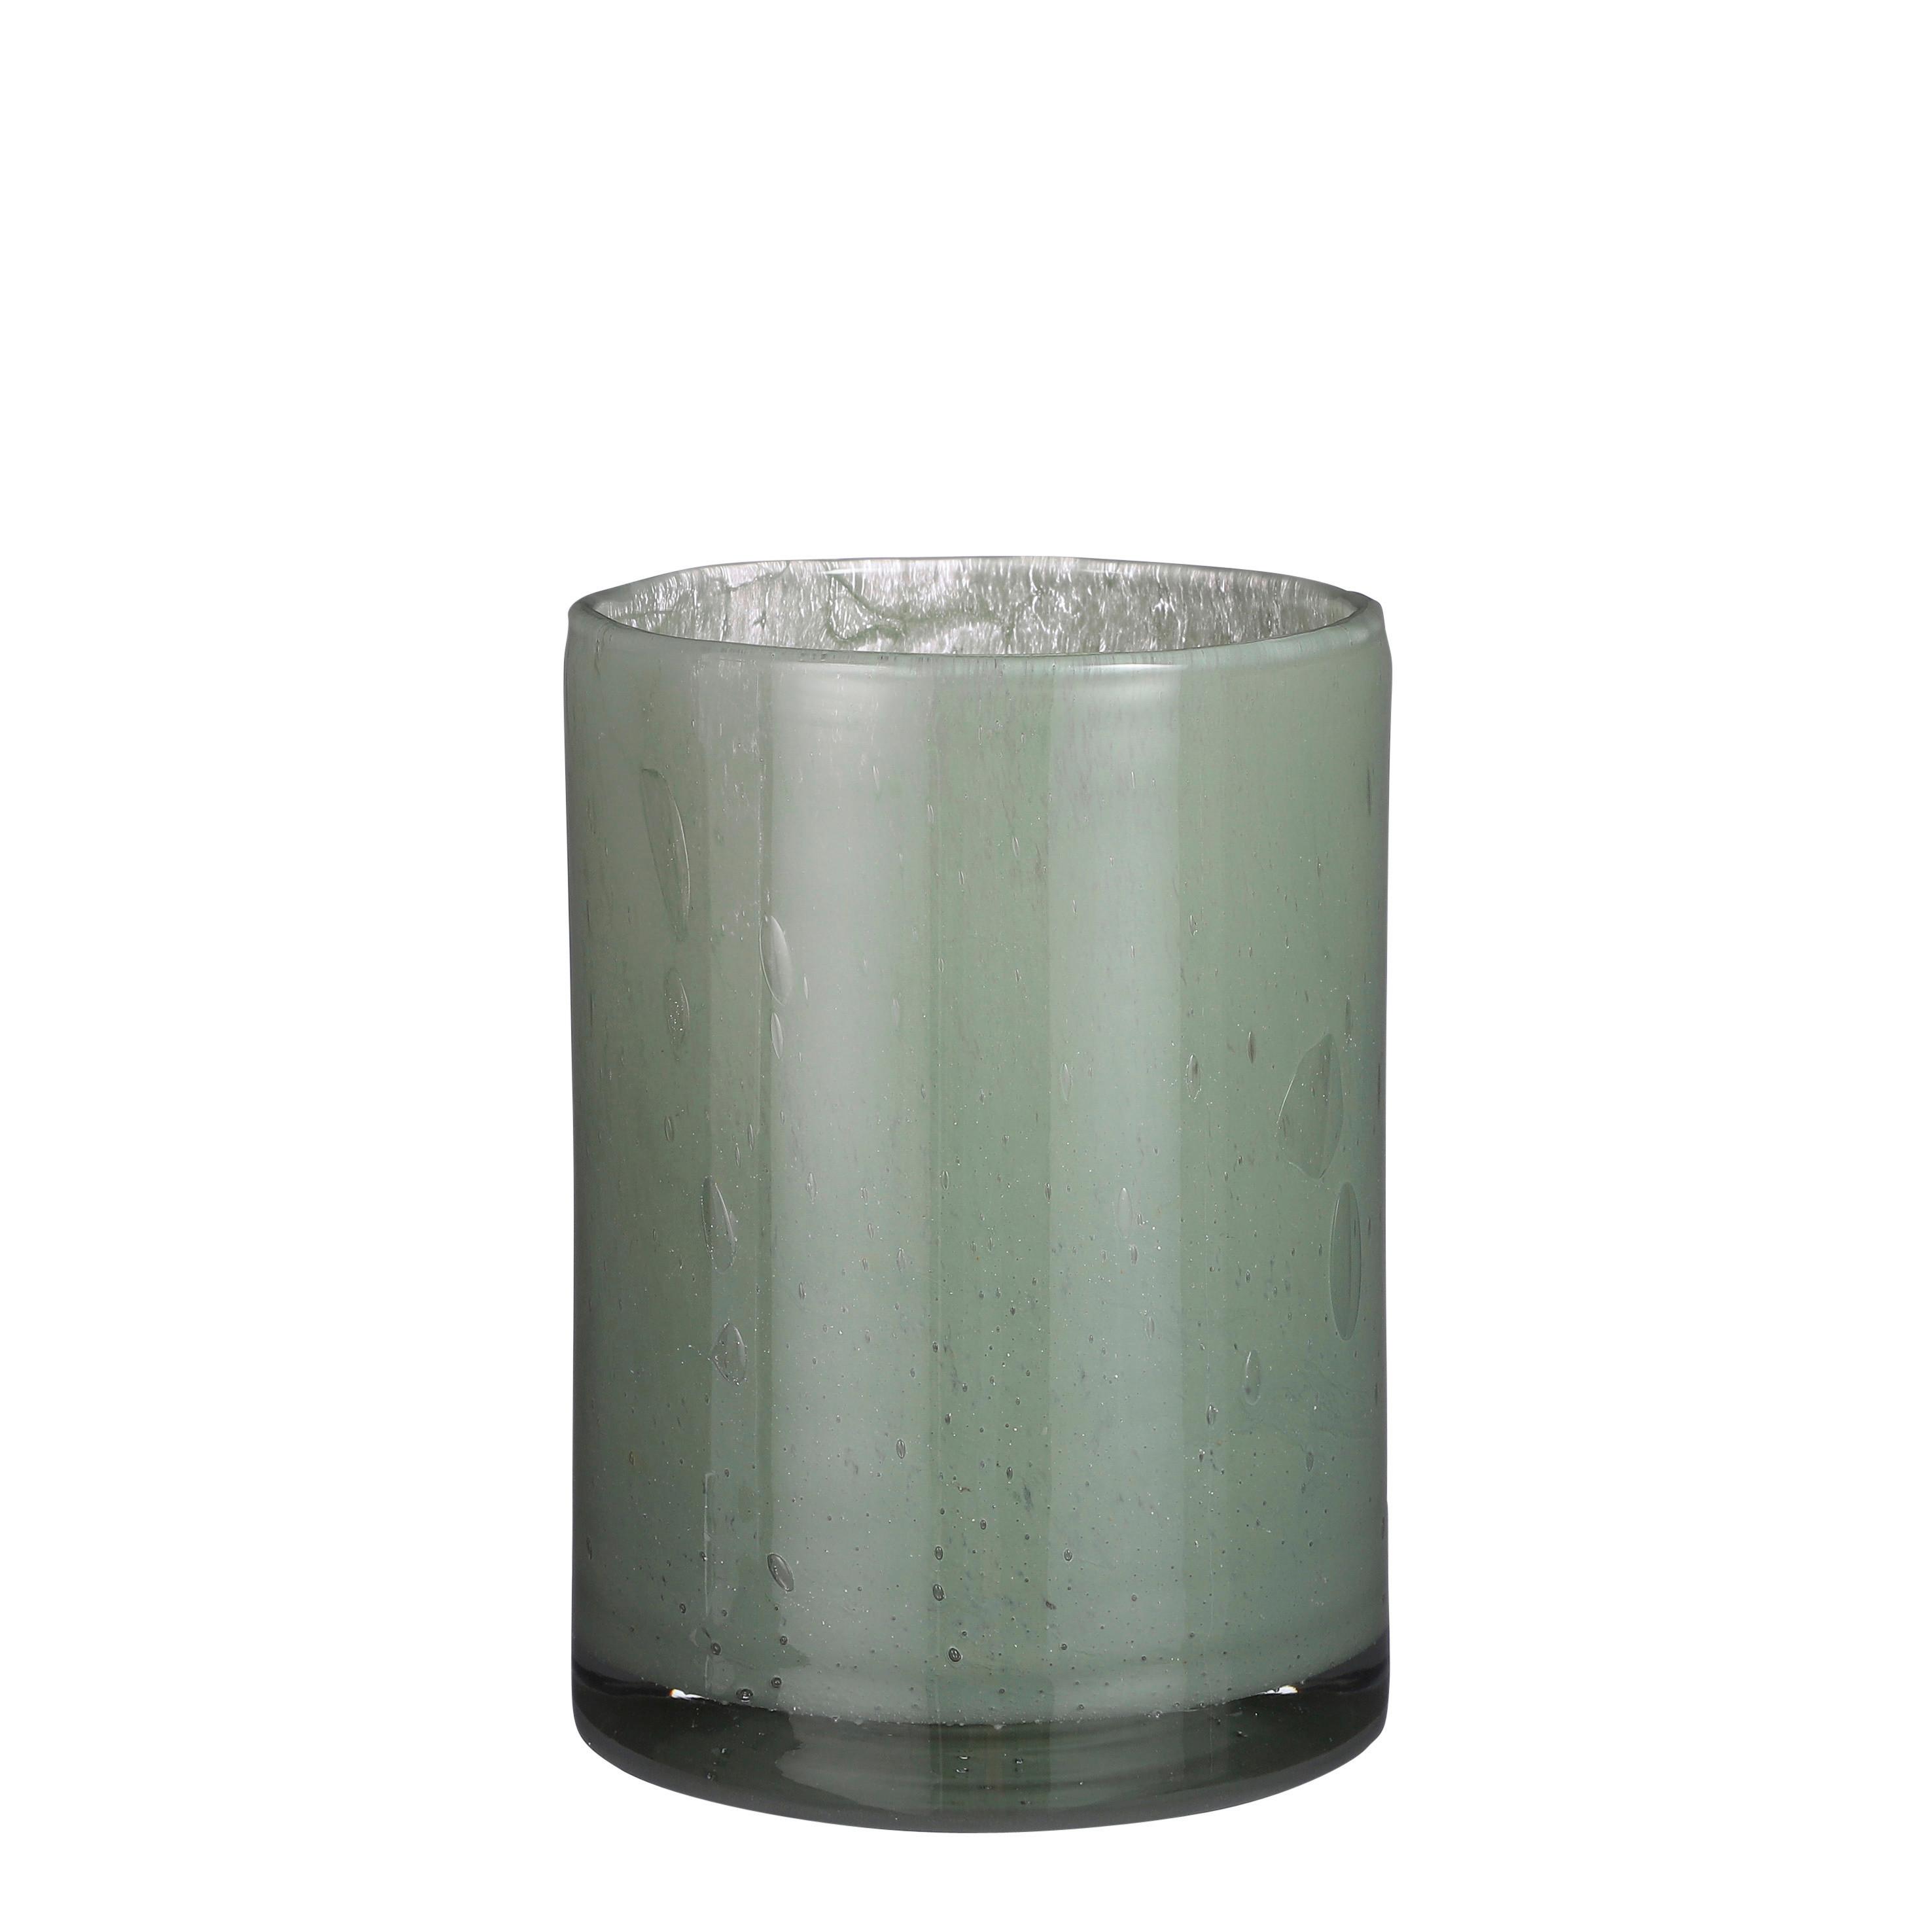 Dekorativna Vaza Estelle -Paz- - zelena, Basics, steklo (17/23cm) - Modern Living